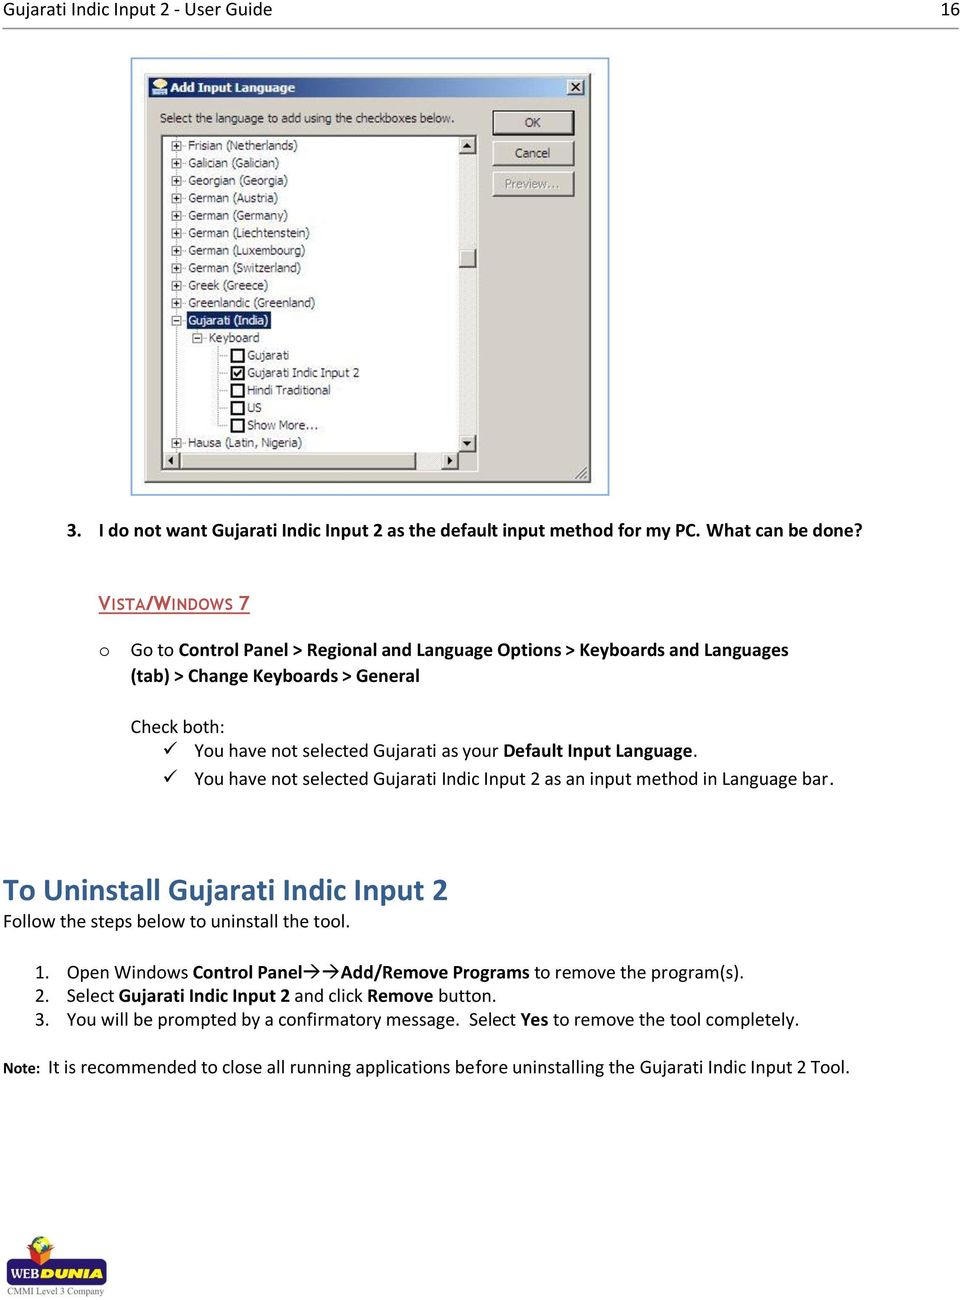 hindi indic input 2 for windows 7 32bit